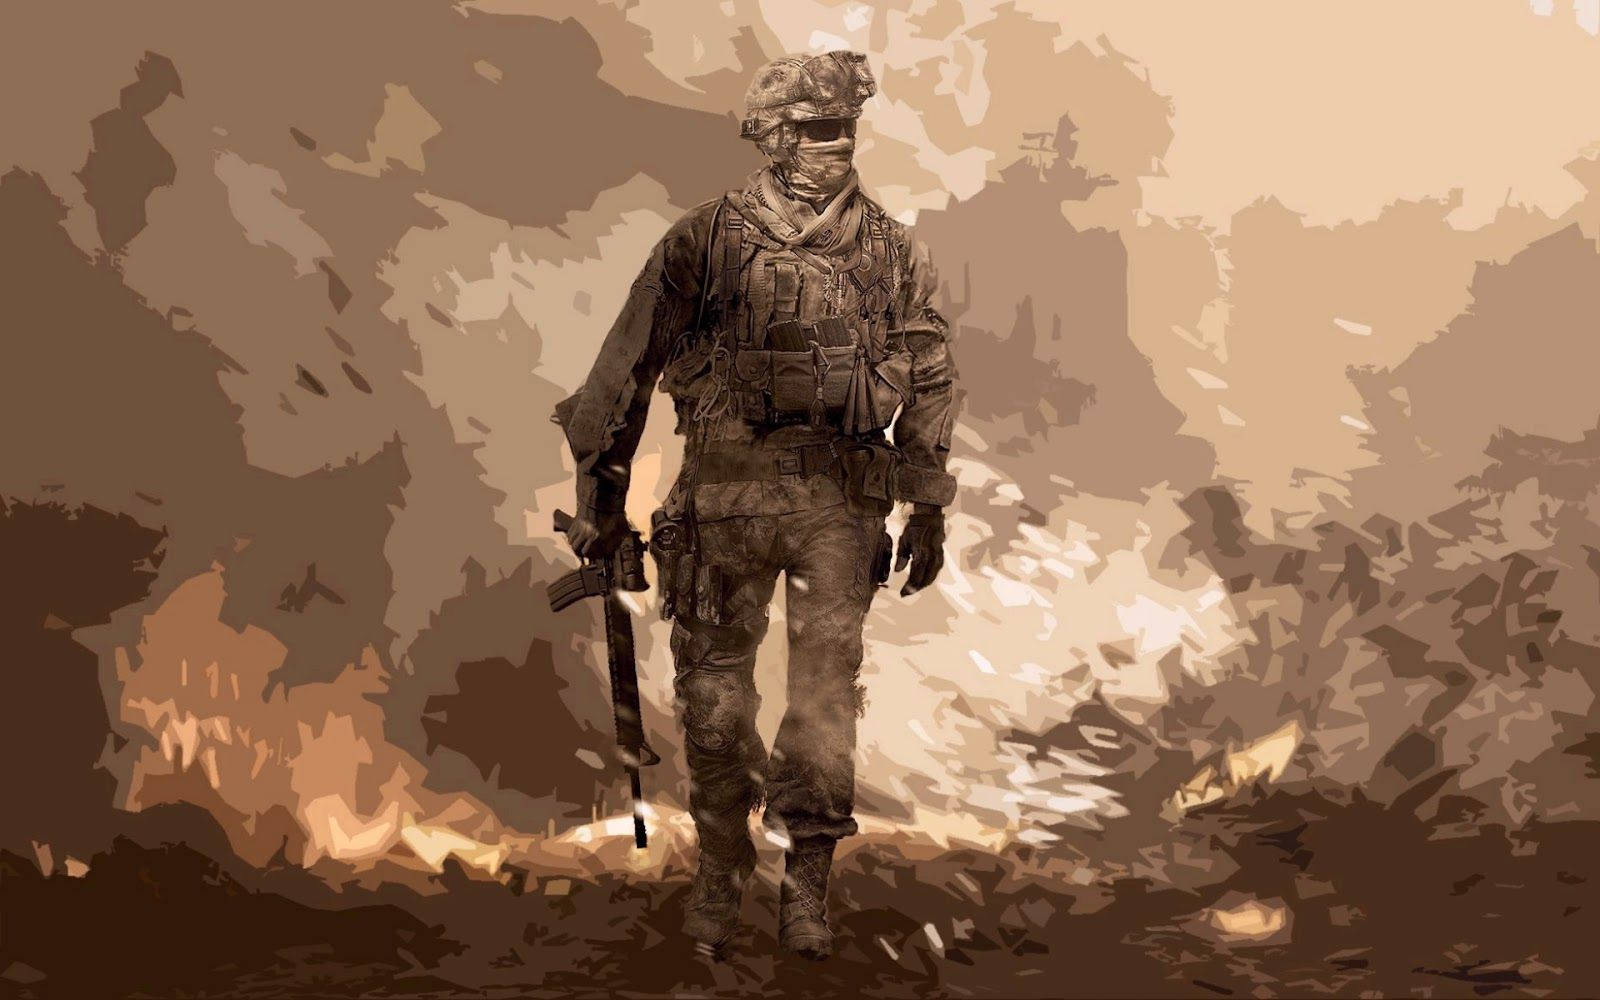 Cool Military Art Illustration